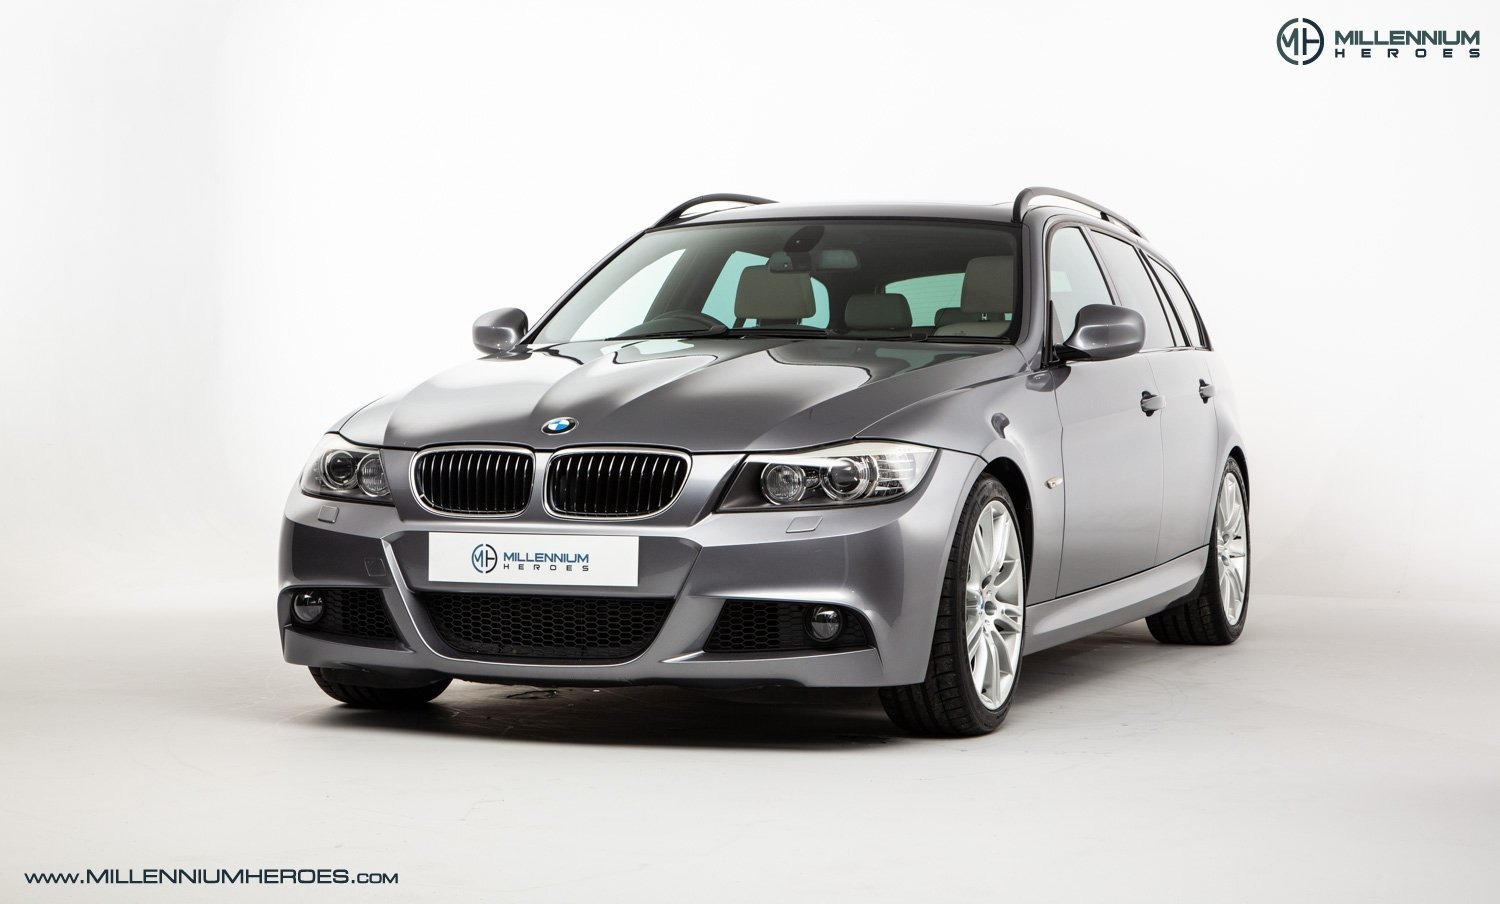 BMW E91 3-Series Touring For Sale - BaT Auctions